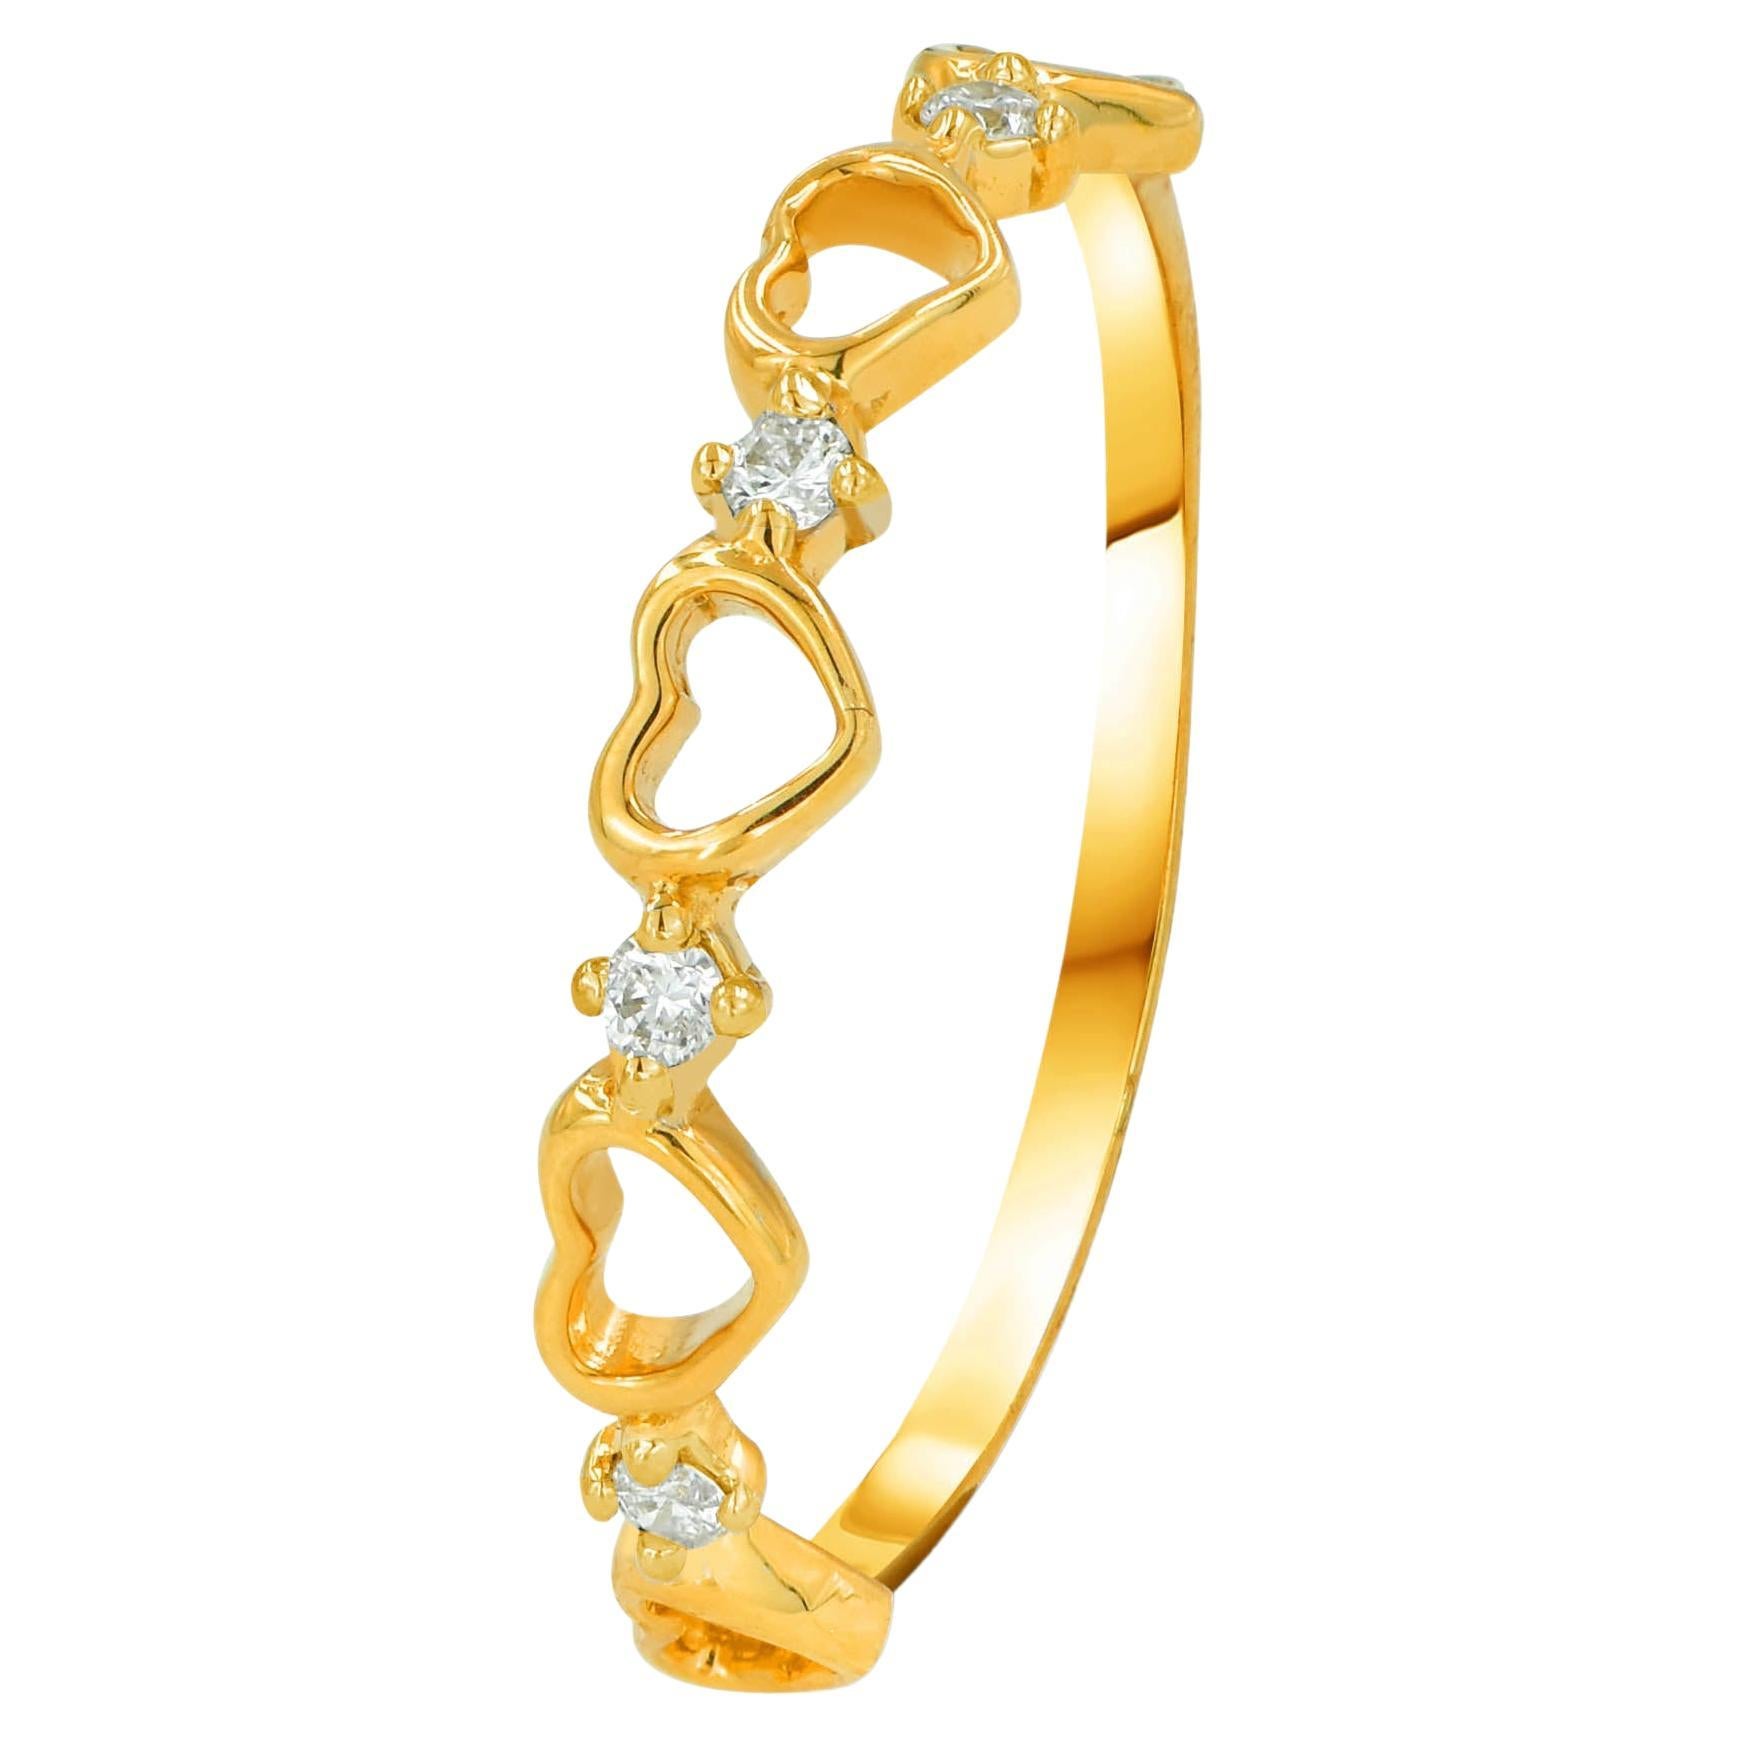 For Sale:  14k Gold 0.07 Carat Diamond Heart Ring